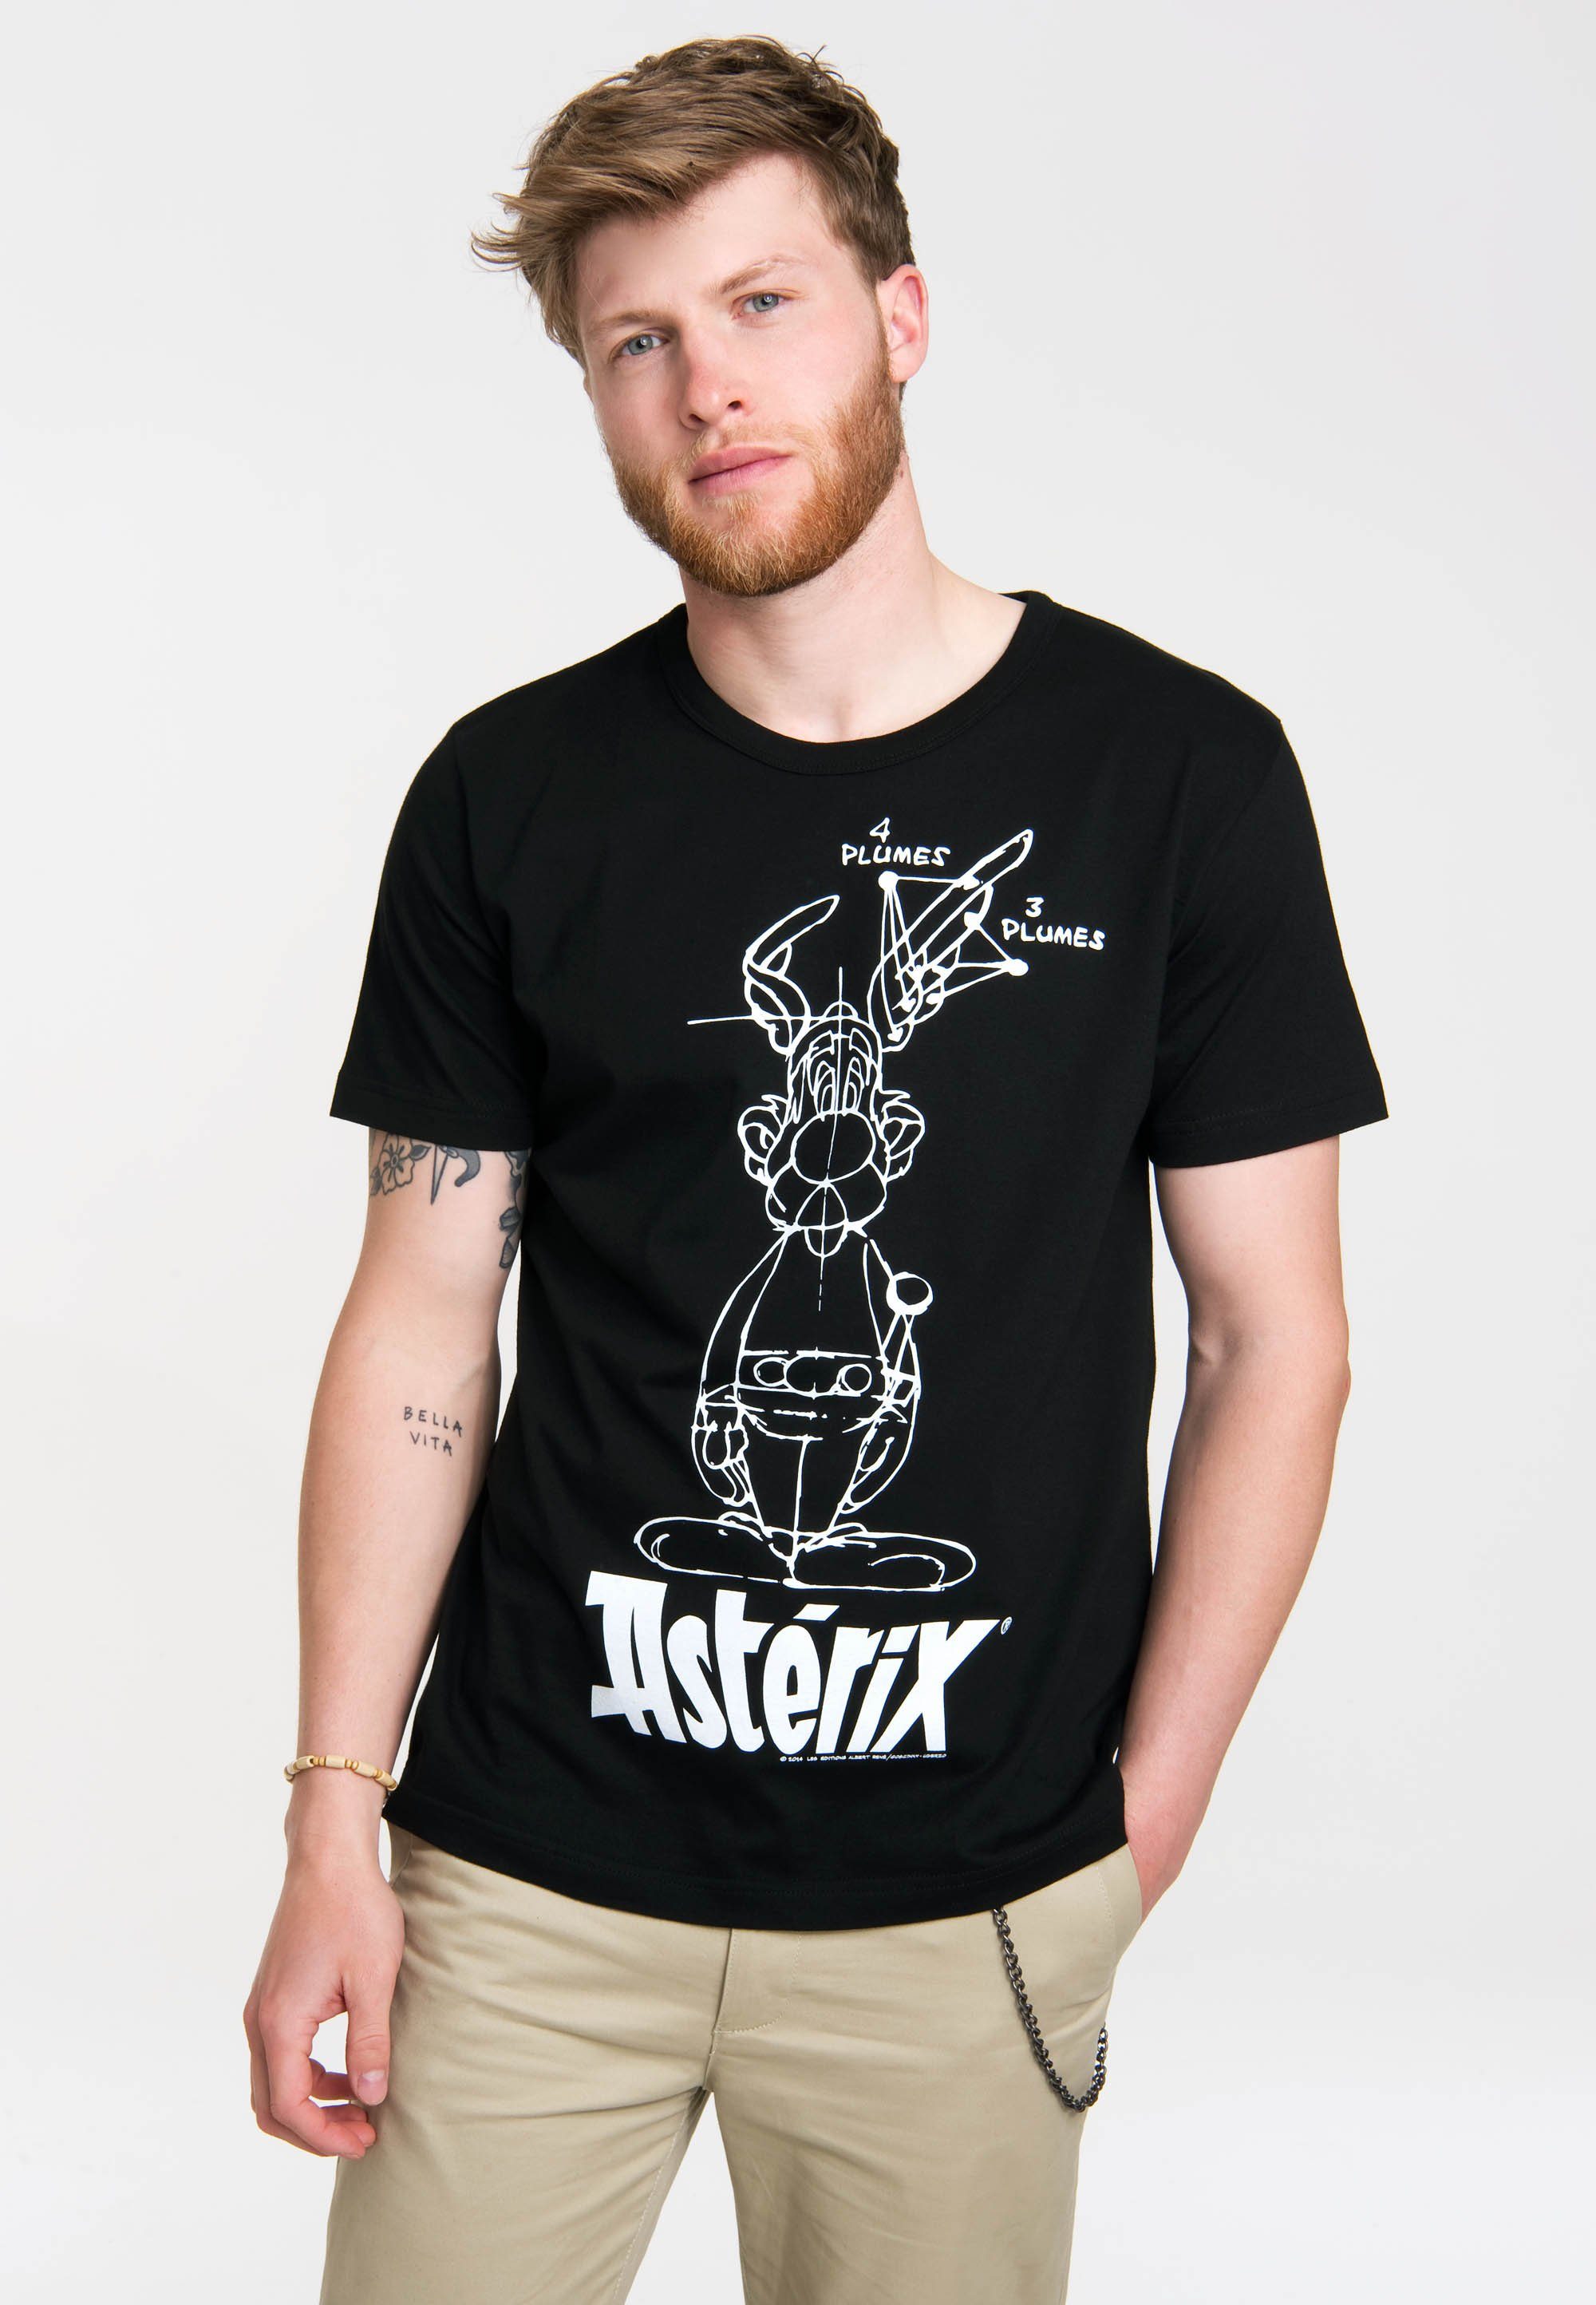 T-Shirt Originaldesign Gallier Asterix der lizenzierten mit LOGOSHIRT